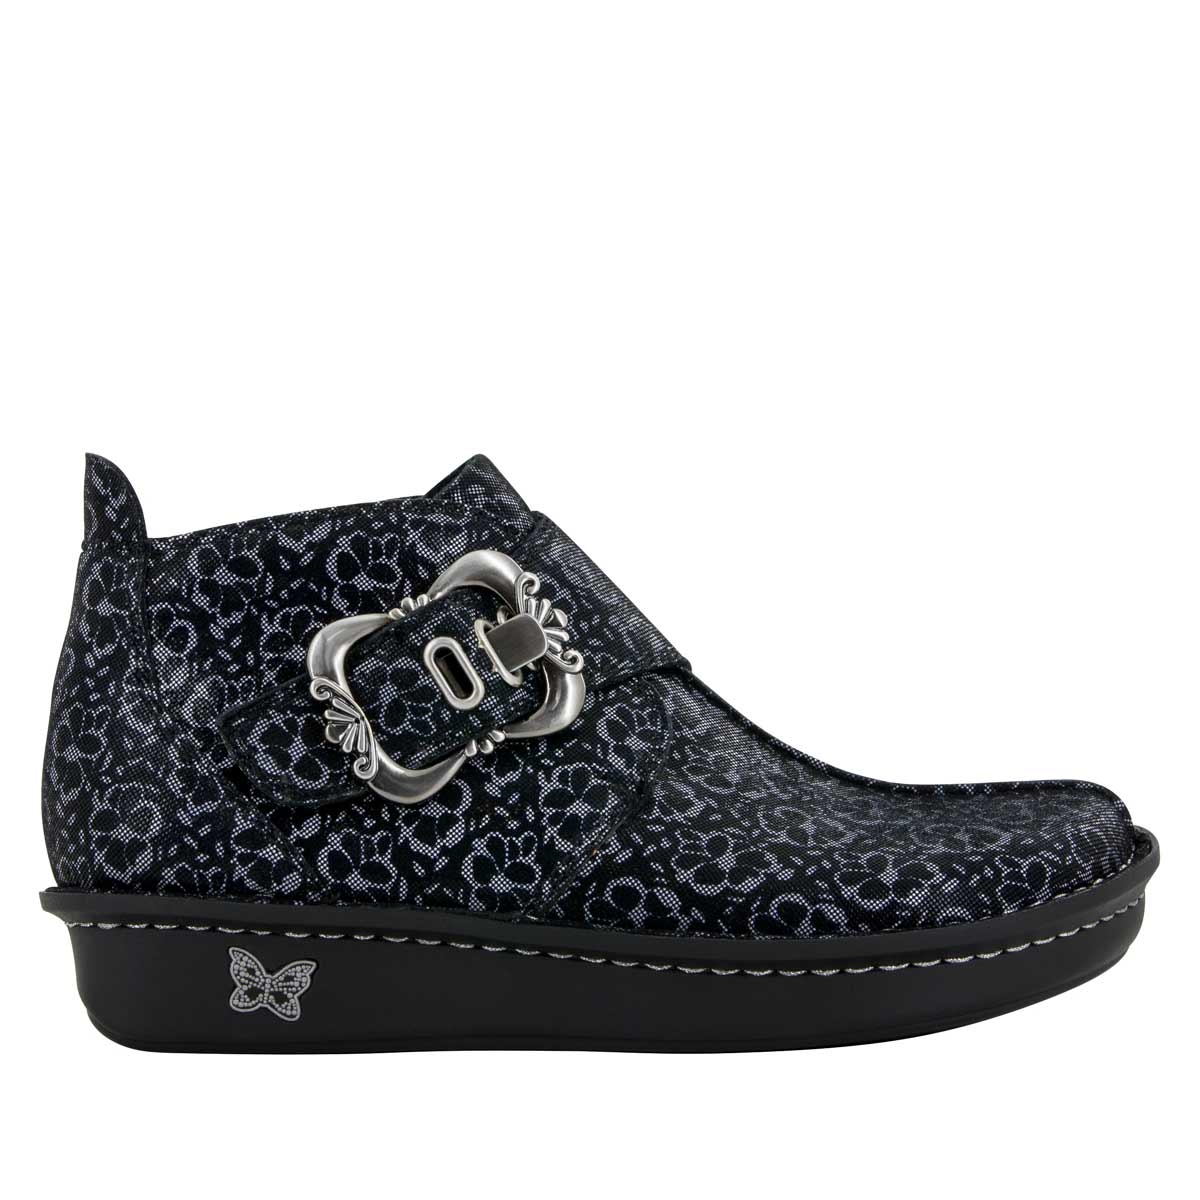 B,M BHFO 9914 Alegria Womens Caiti Black Leather Casual Boots Shoes 37 Medium